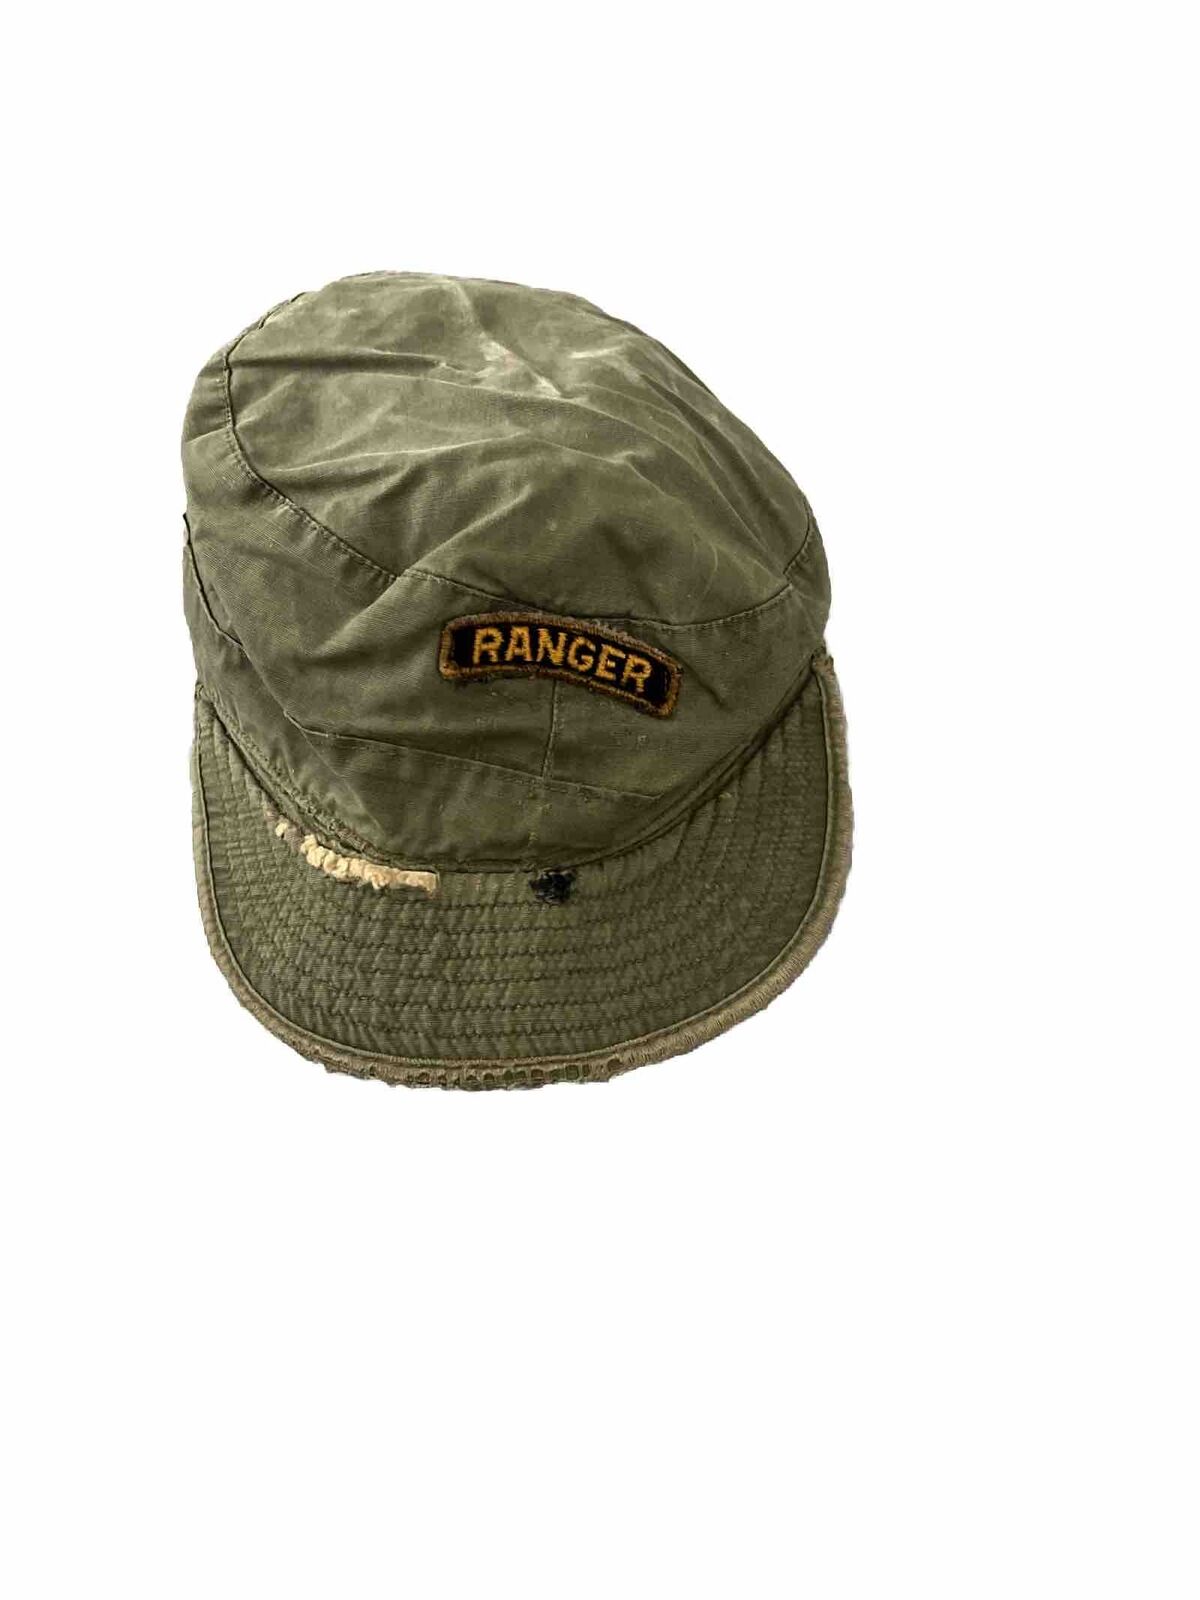 1957 Us Army Ranger Hat